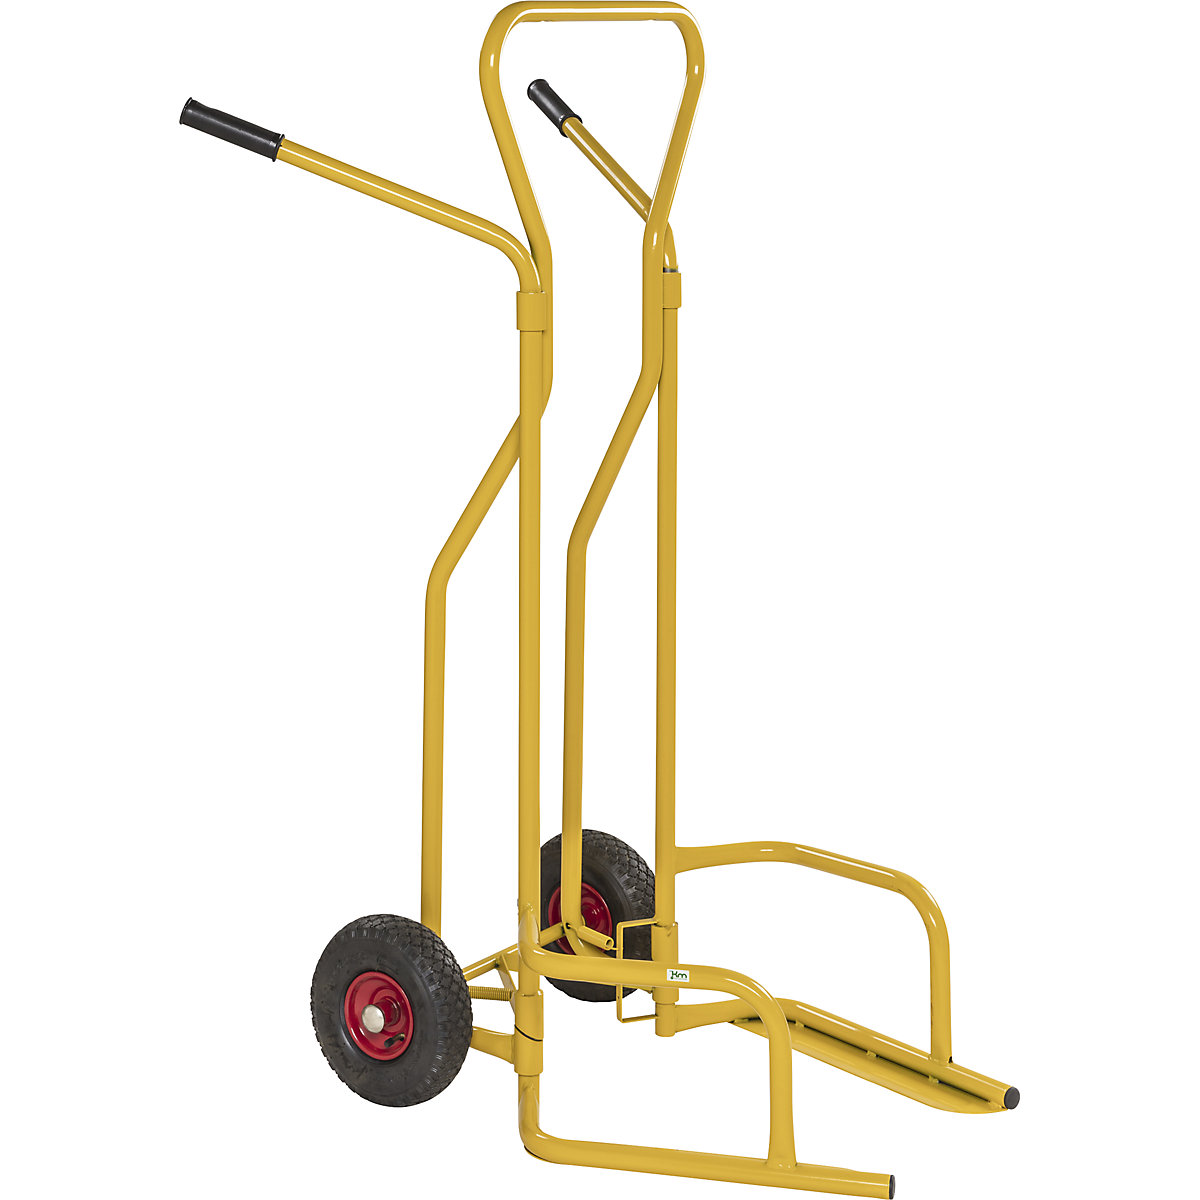 Carrello per pneumatici – Kongamek, portata 200 kg, giallo, a partire da 5 pz.-11